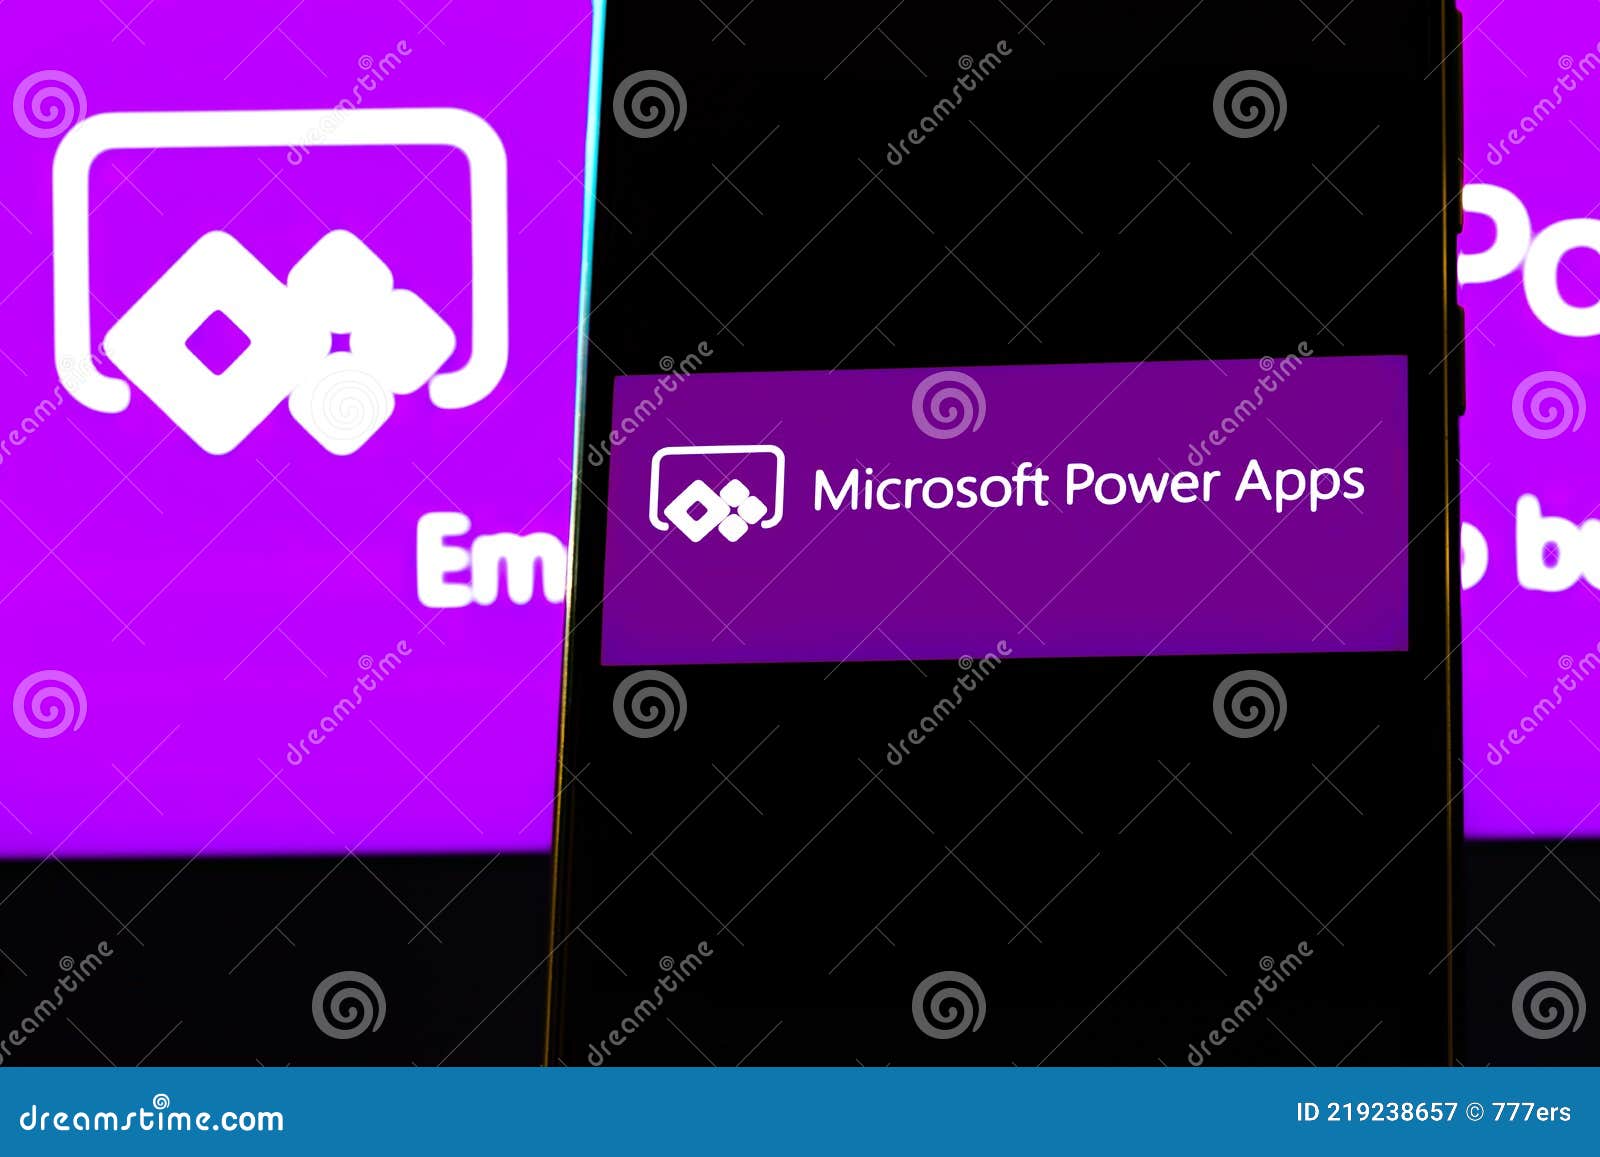 Microsoft Power Apps - ShareVolts